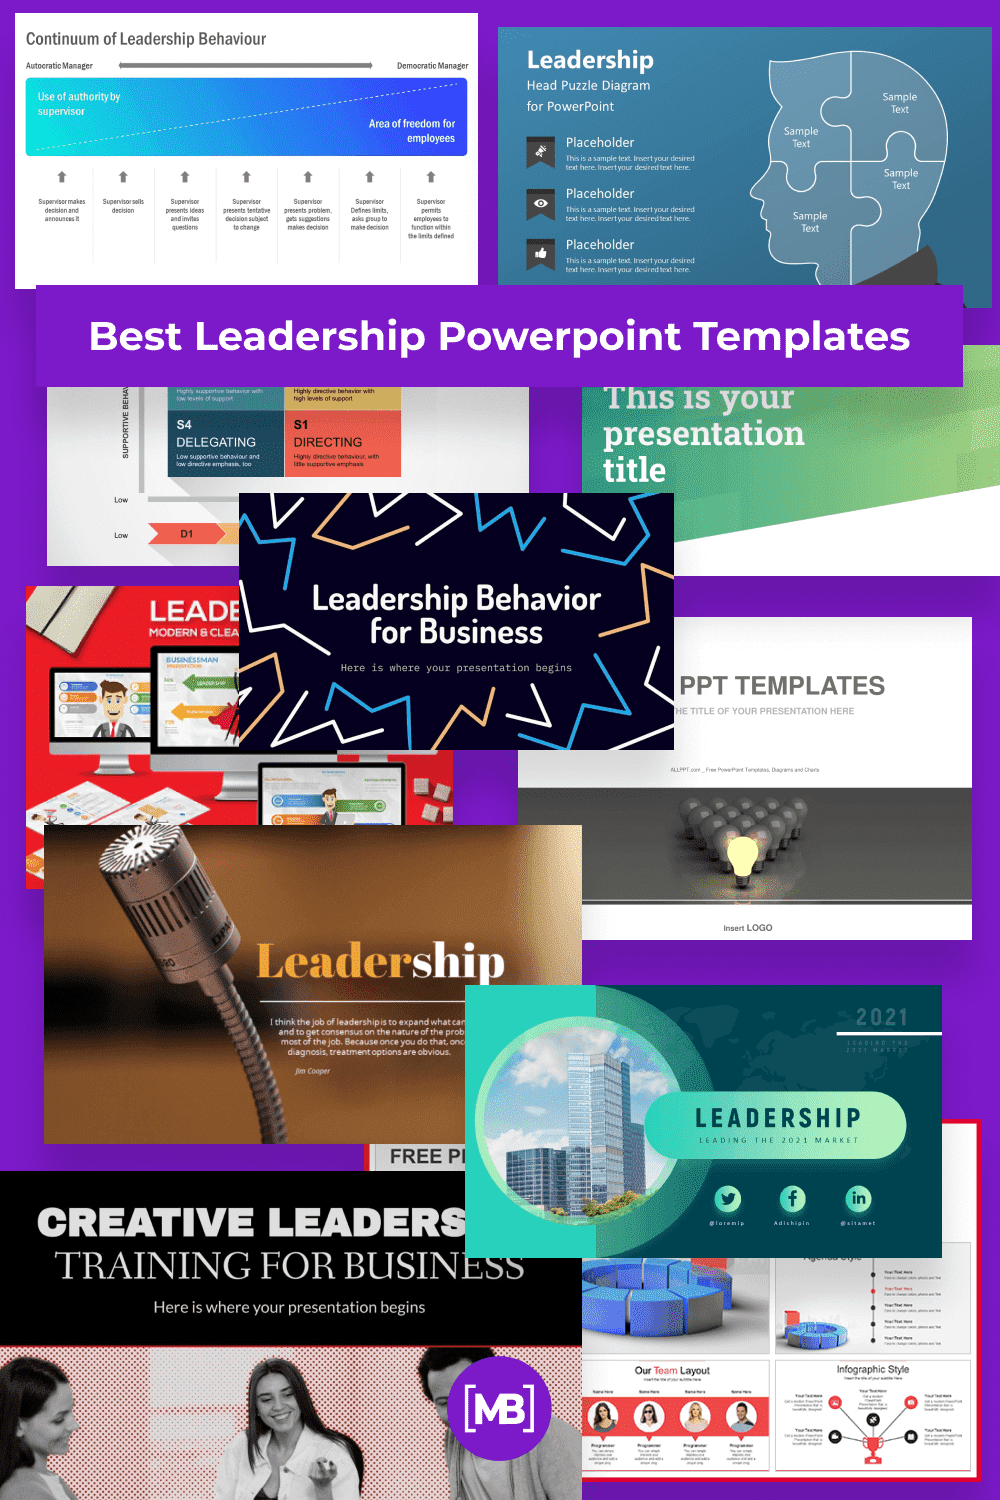 Leadership Power Point Templates Pinterest.